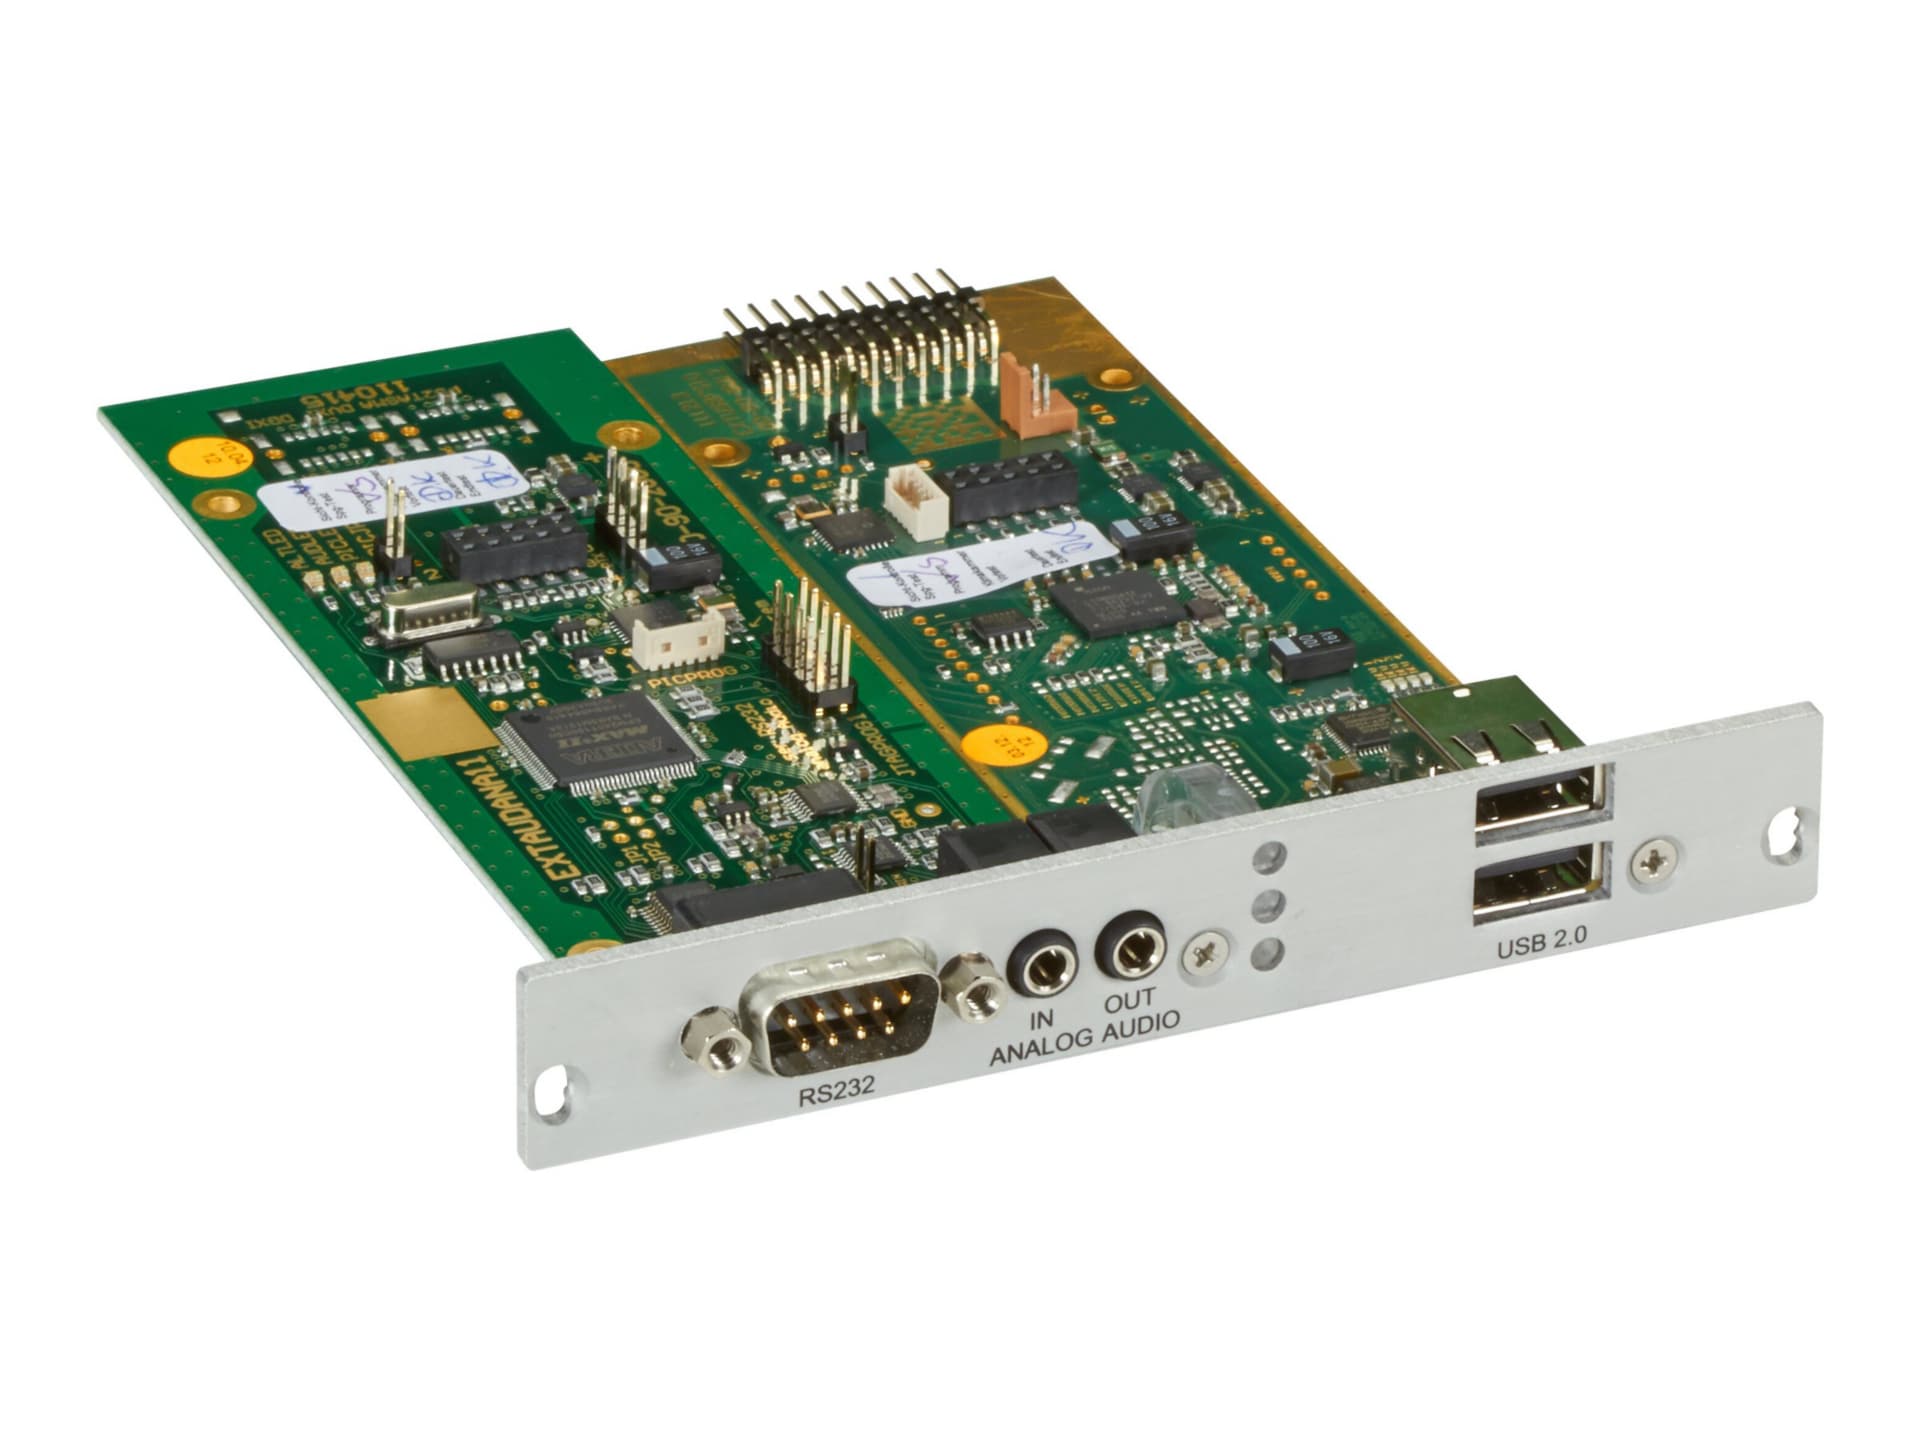 Black Box DKM FX Receiver Modular Interface Card - audio/USB/serial extende